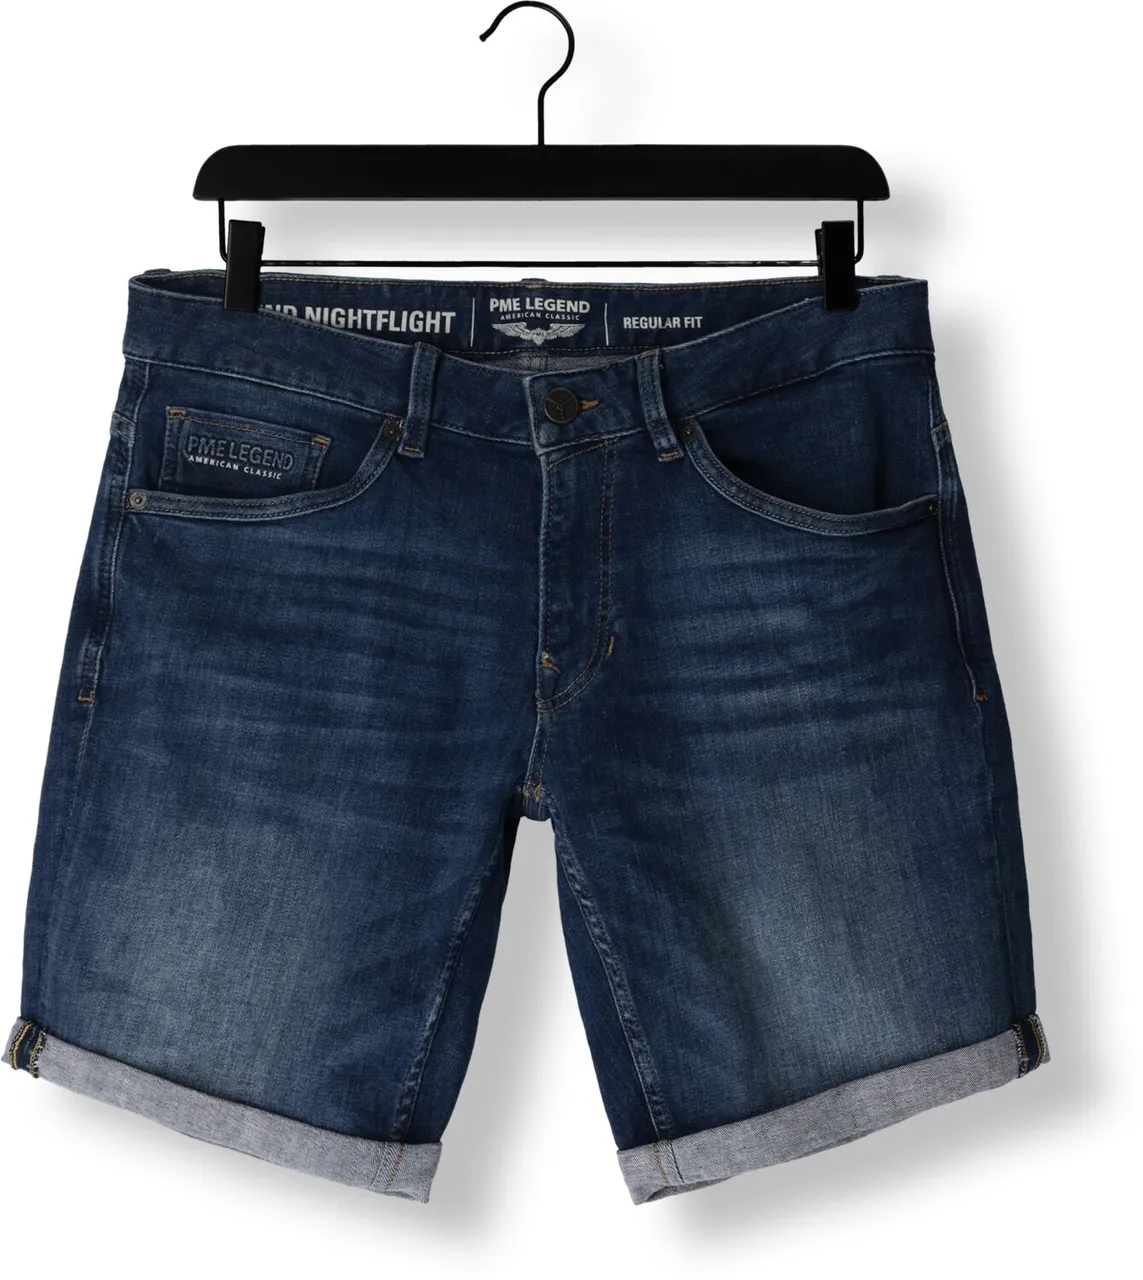 PME LEGEND Heren Jeans Pme Legend Nightflight Shorts - Blauw